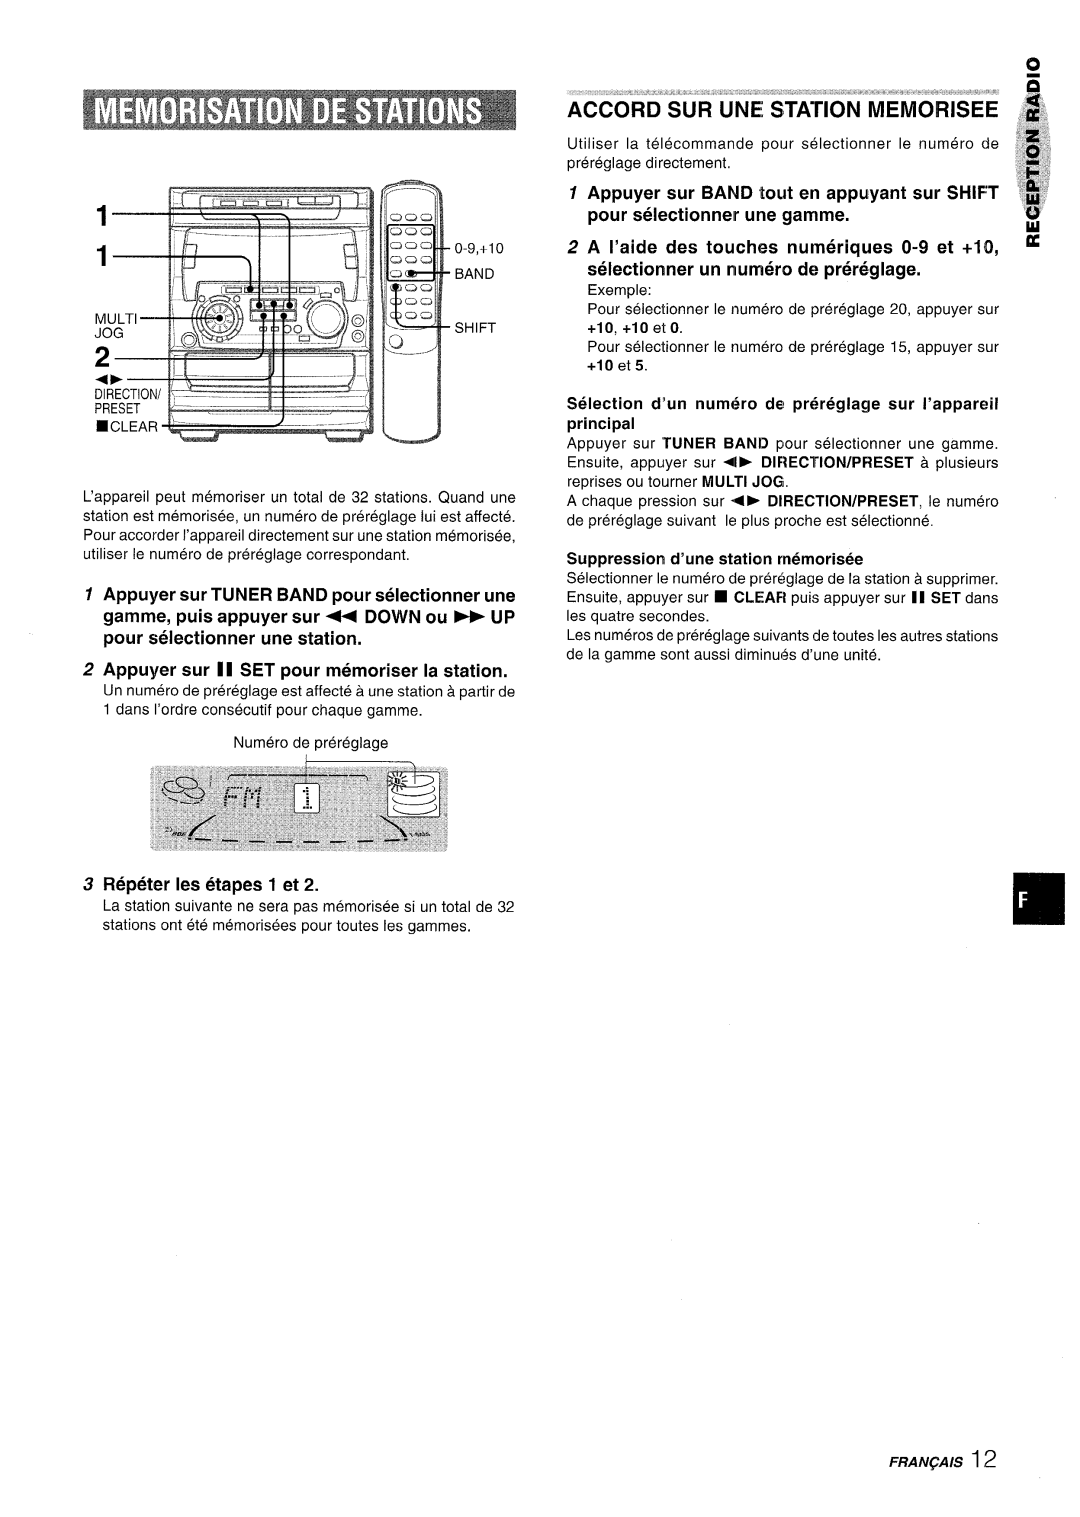 Sony NSX-A707 Accord Sur Une Station Memorisee, Appuyer sur TUNER BAND pour selectionner une, Repeter Ies etapes 1 et 